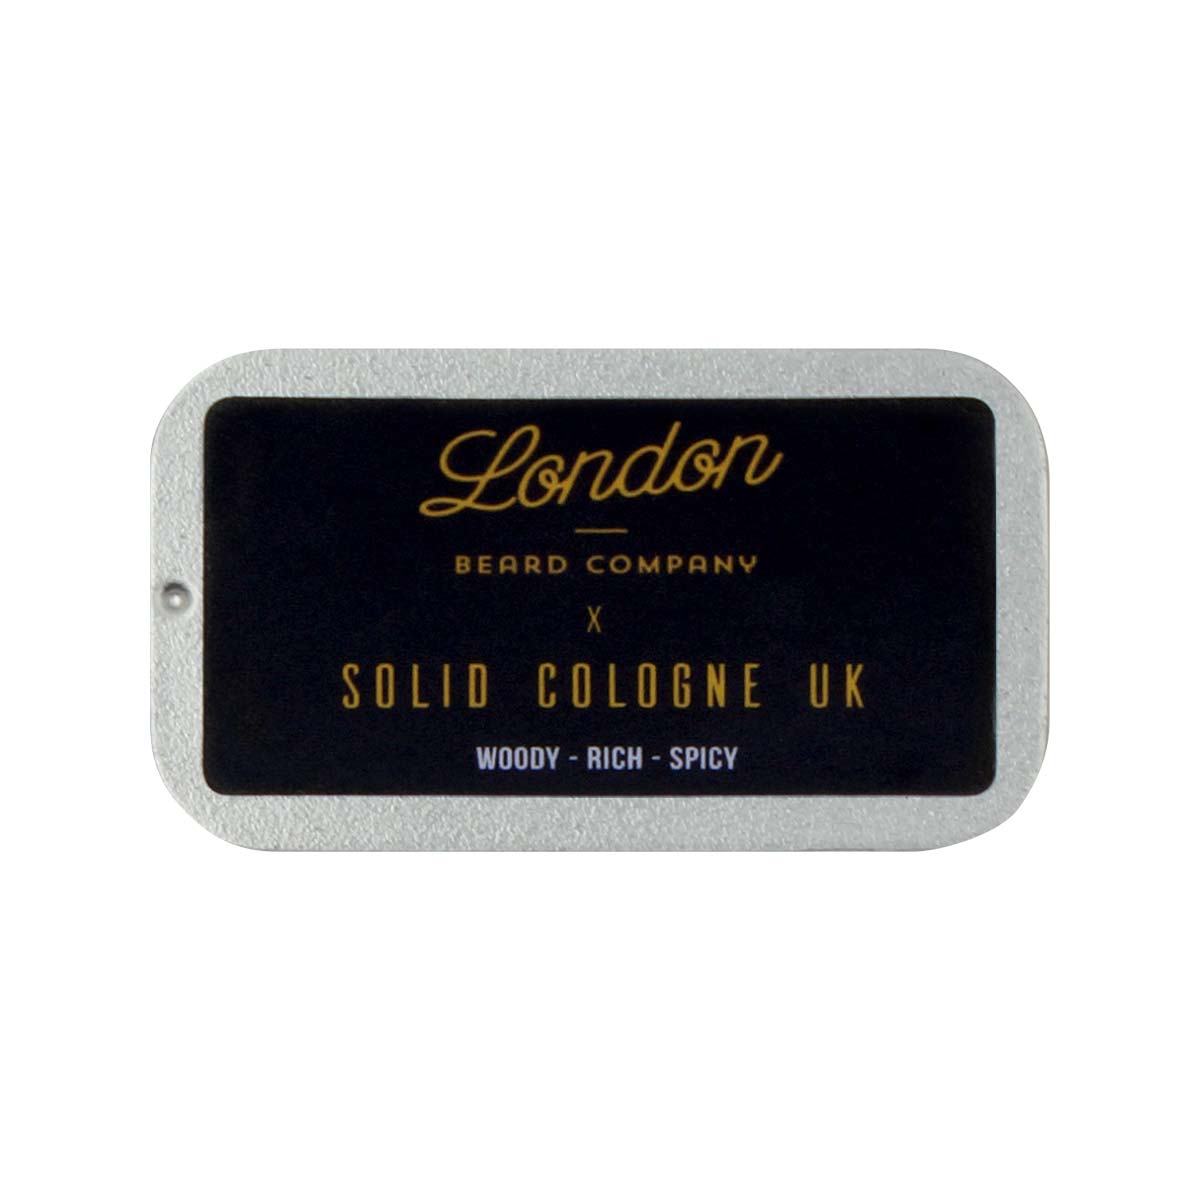 Solid Cologne UK X London Beard Company 18ml-p_2